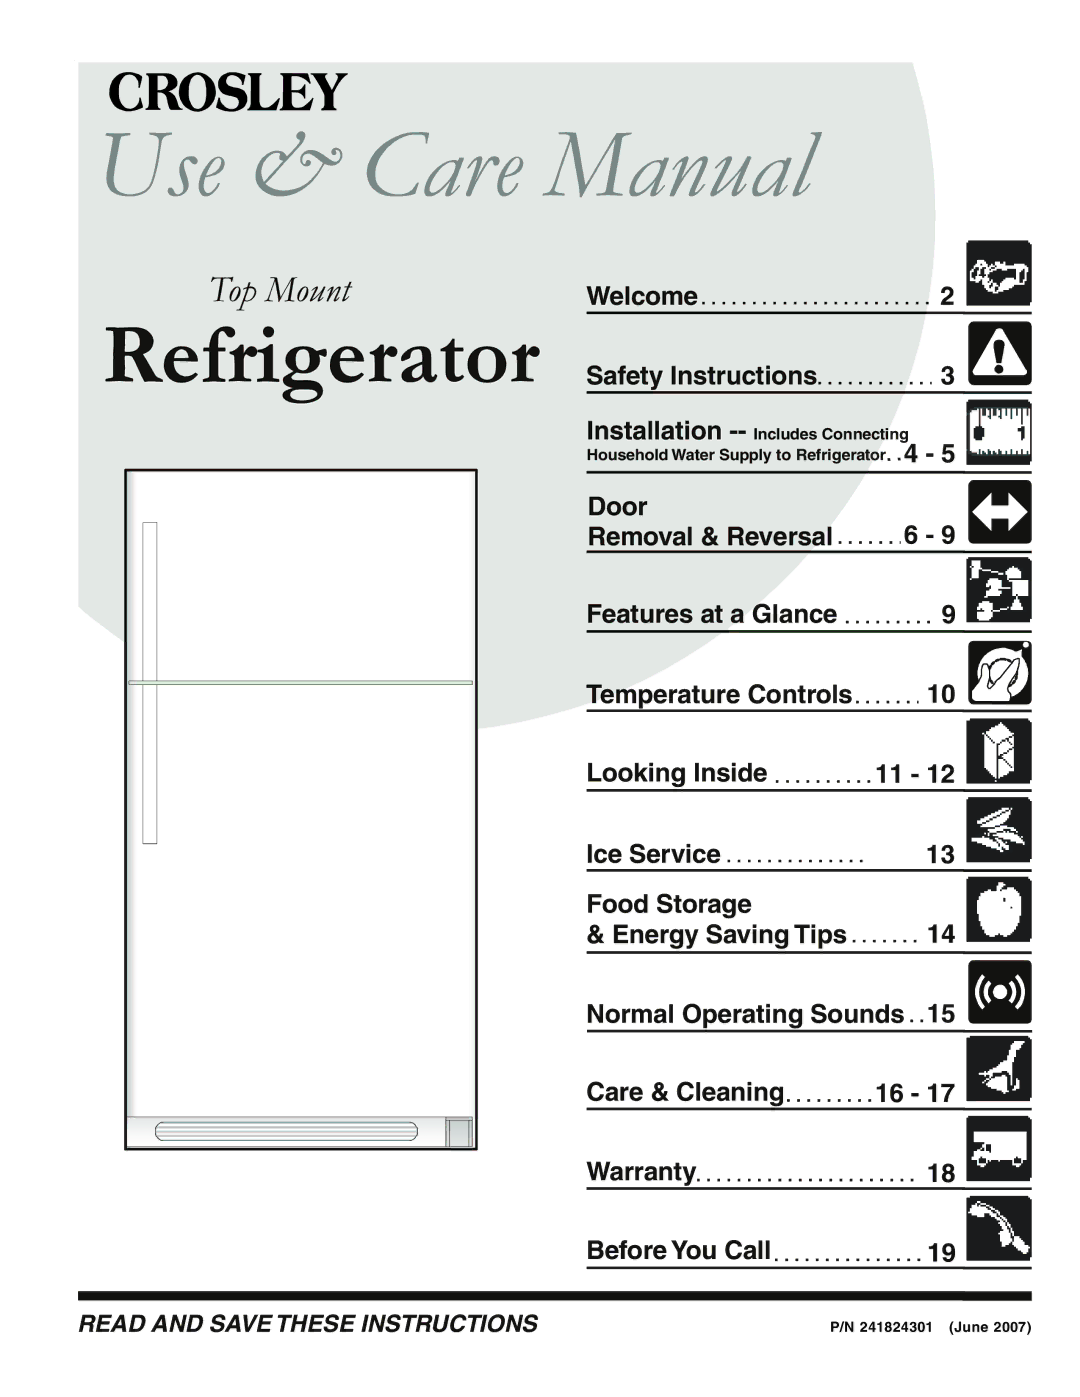 Crosley Refrigerator Top Mount manual Use & Care Manual, June 